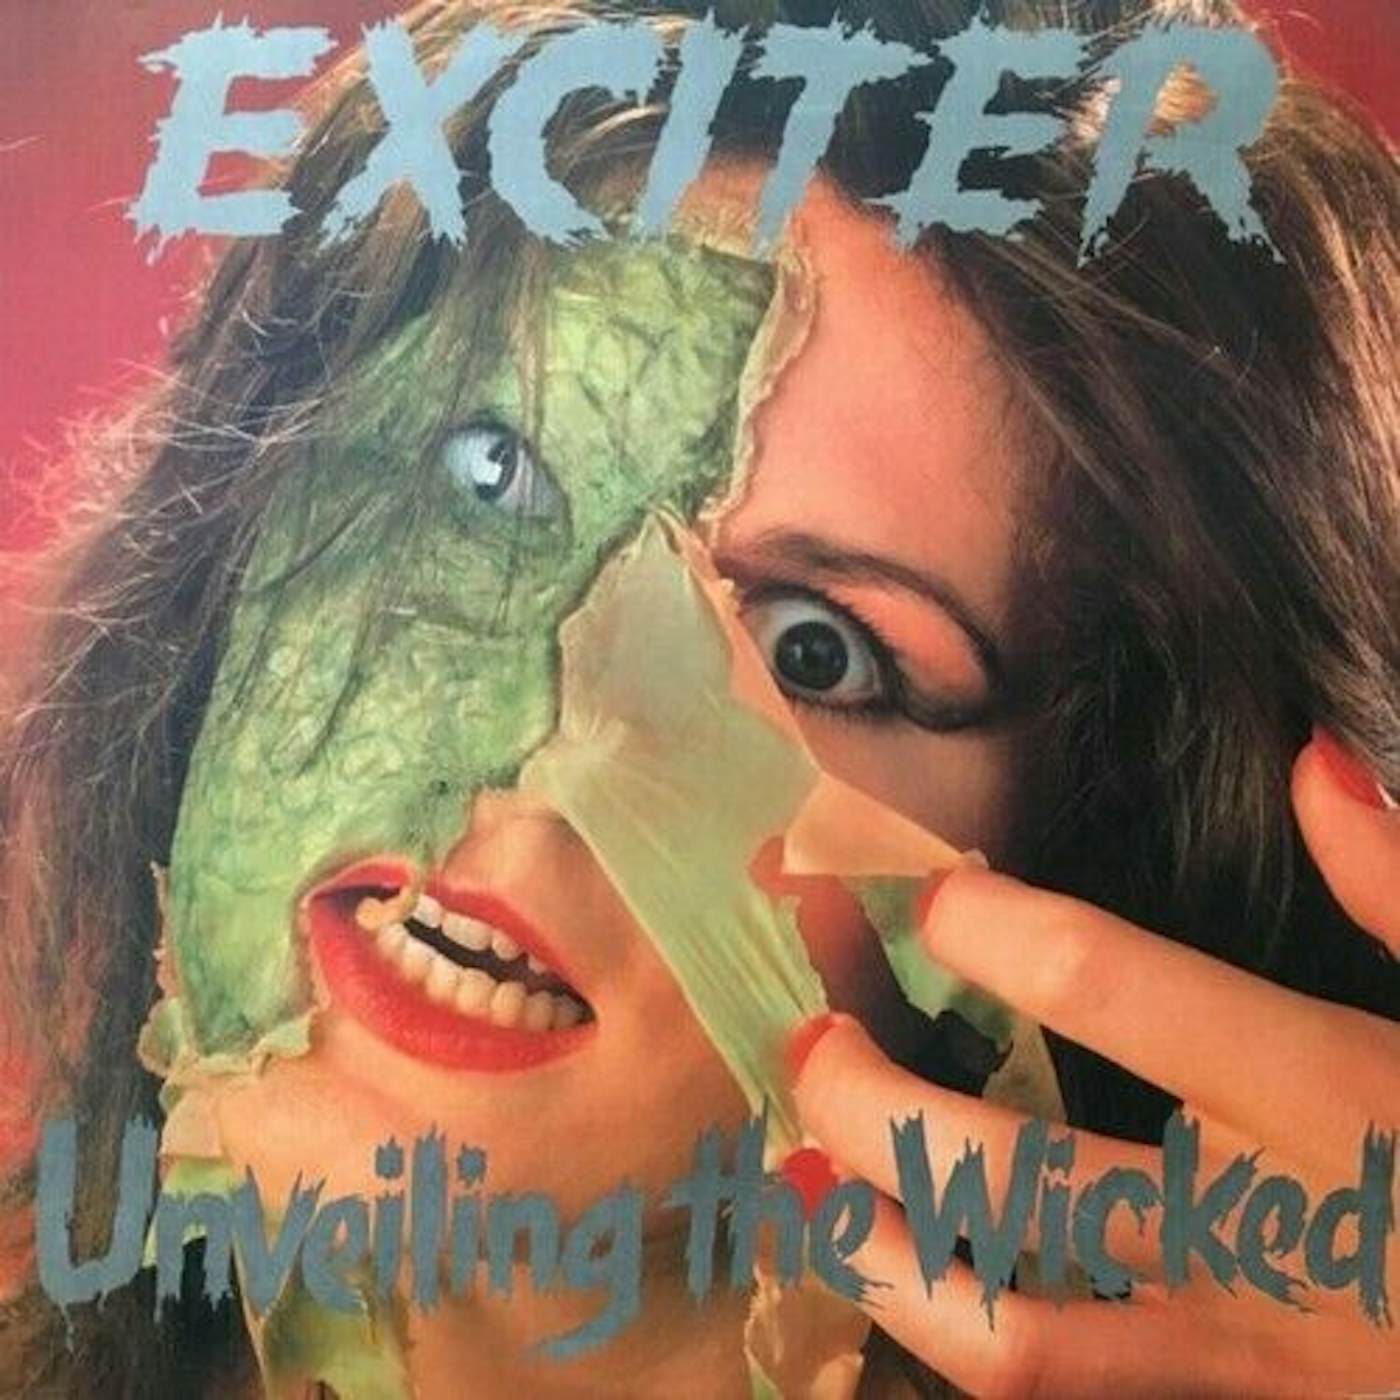 Exciter UNVEILING THE WICKED (NEON GREEN VINYL) Vinyl Record